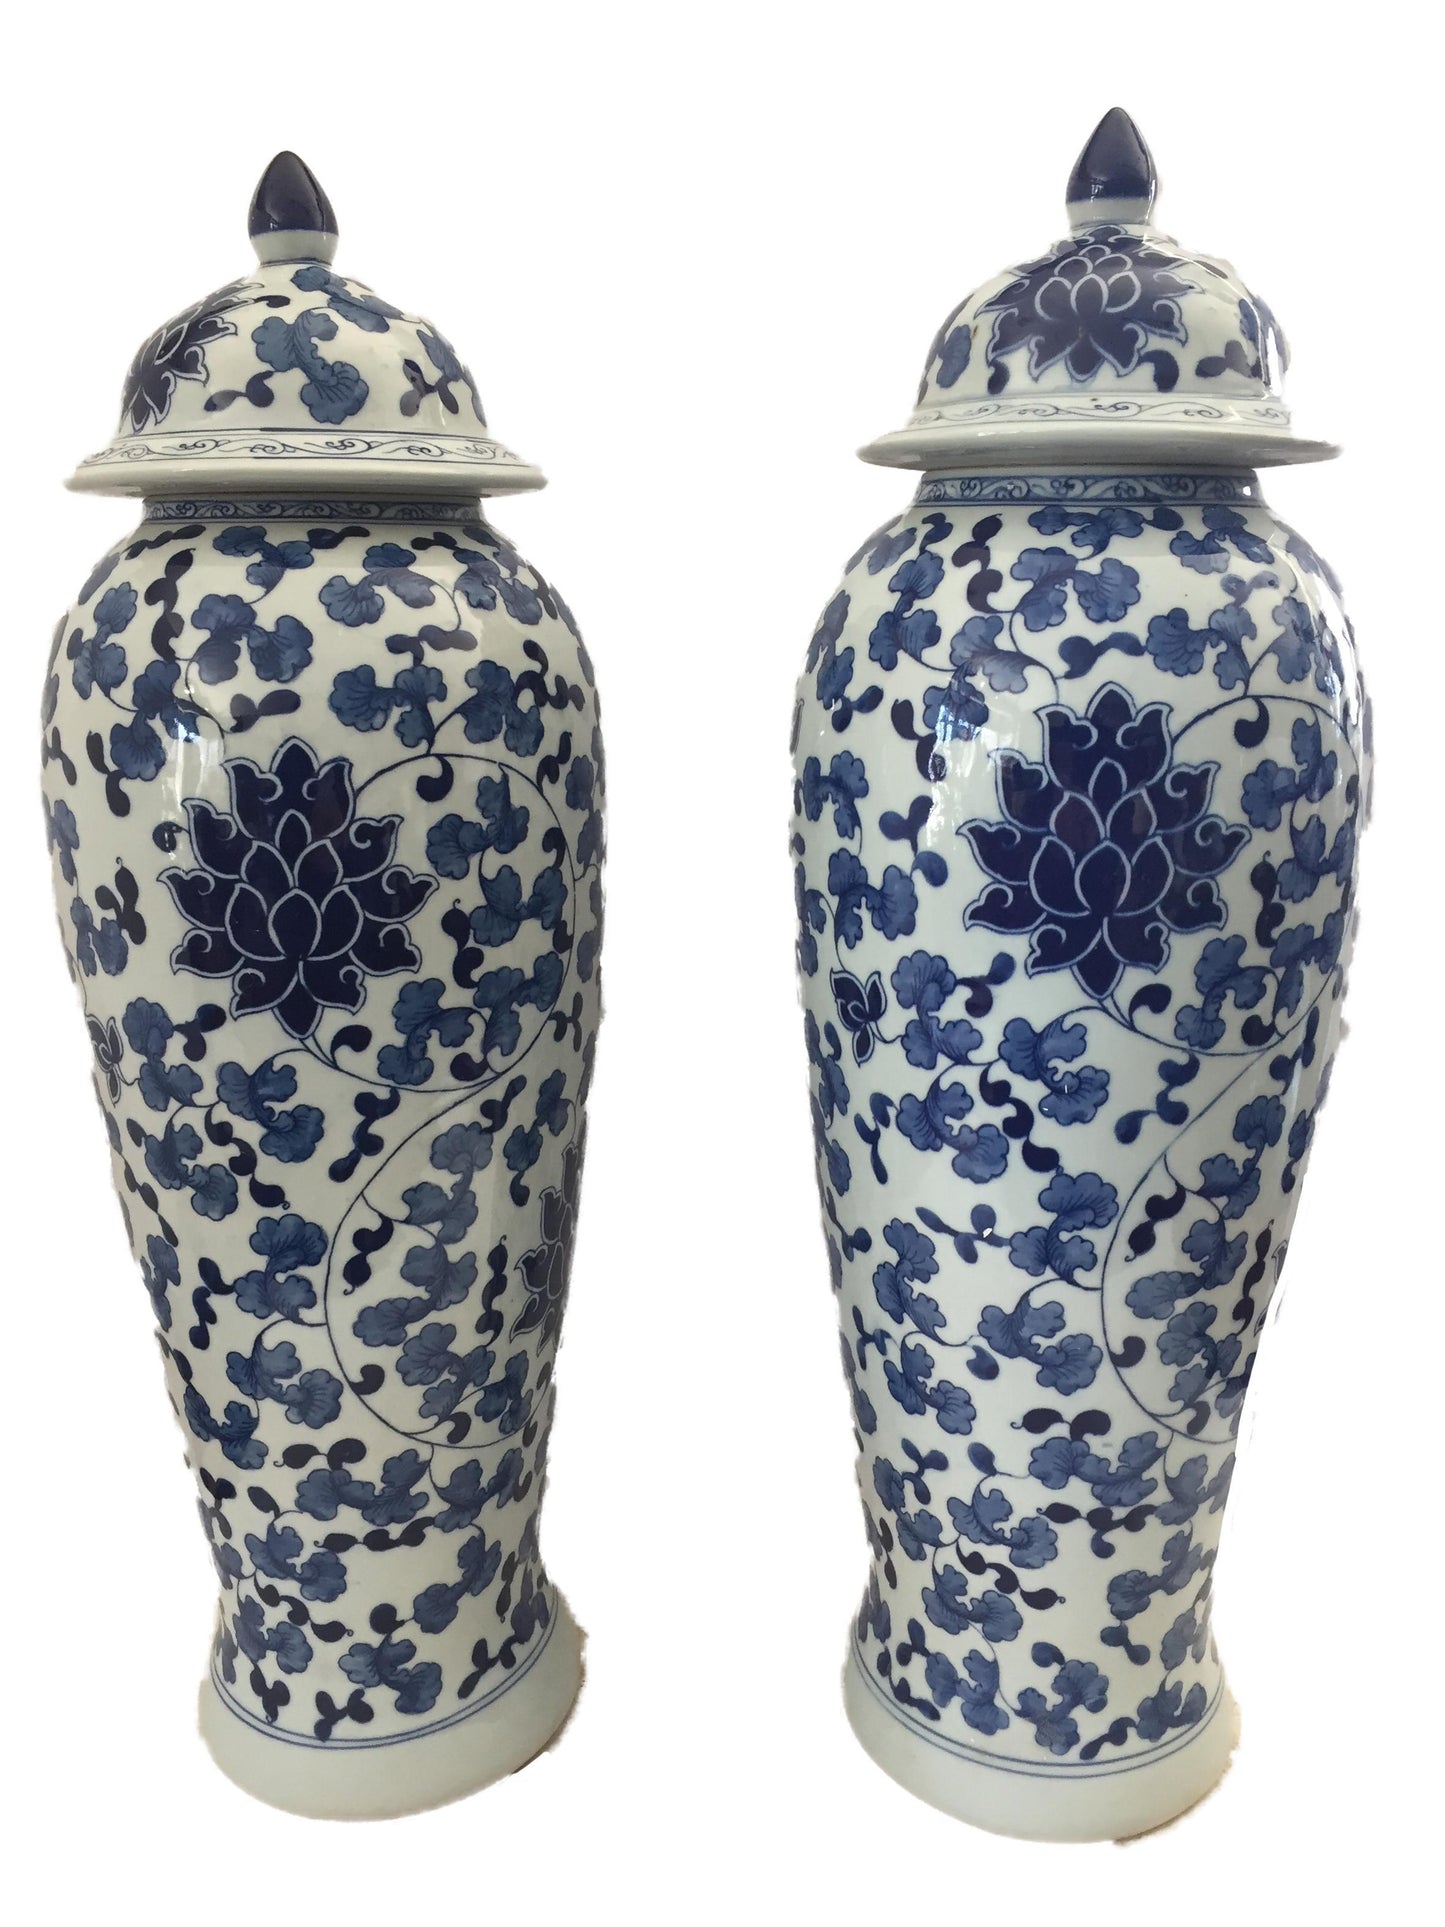 #823 Tall B&w Chinoiserie Porcelain Ginger Jars - a Pair 23" H